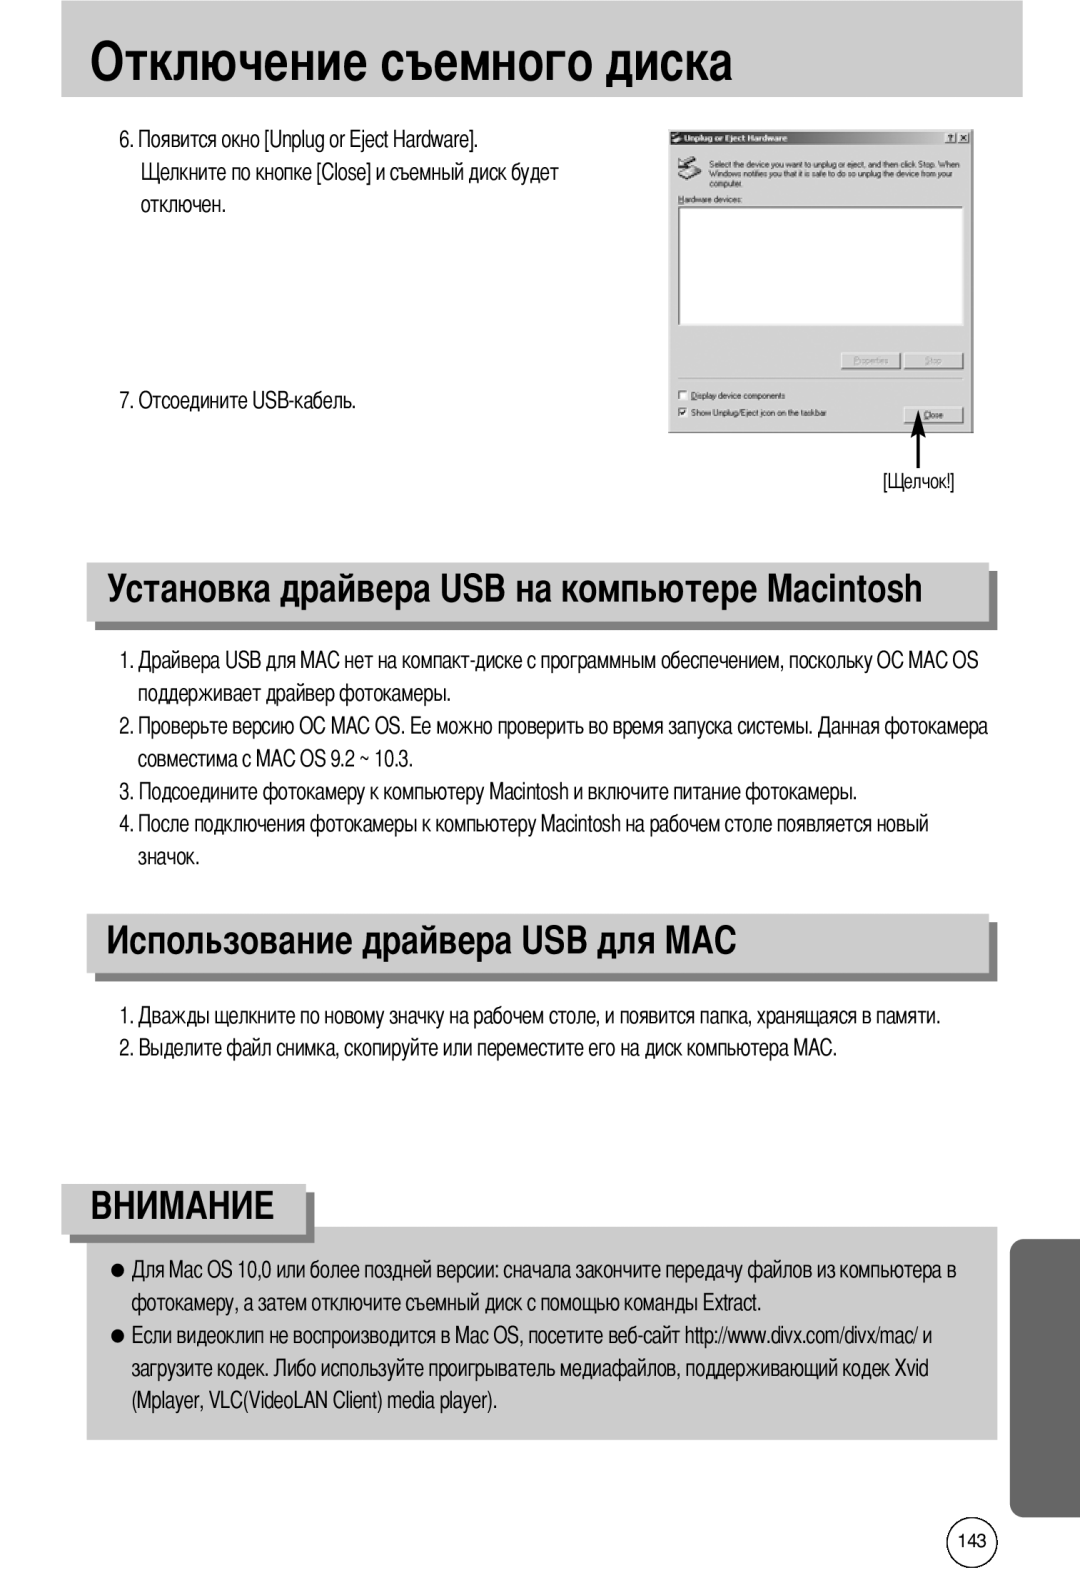 Samsung EC-I50ZZSBA/GB manual Установка драйвера USB на компьютере Macintosh, льзование драйвера USB для MAC, значок 